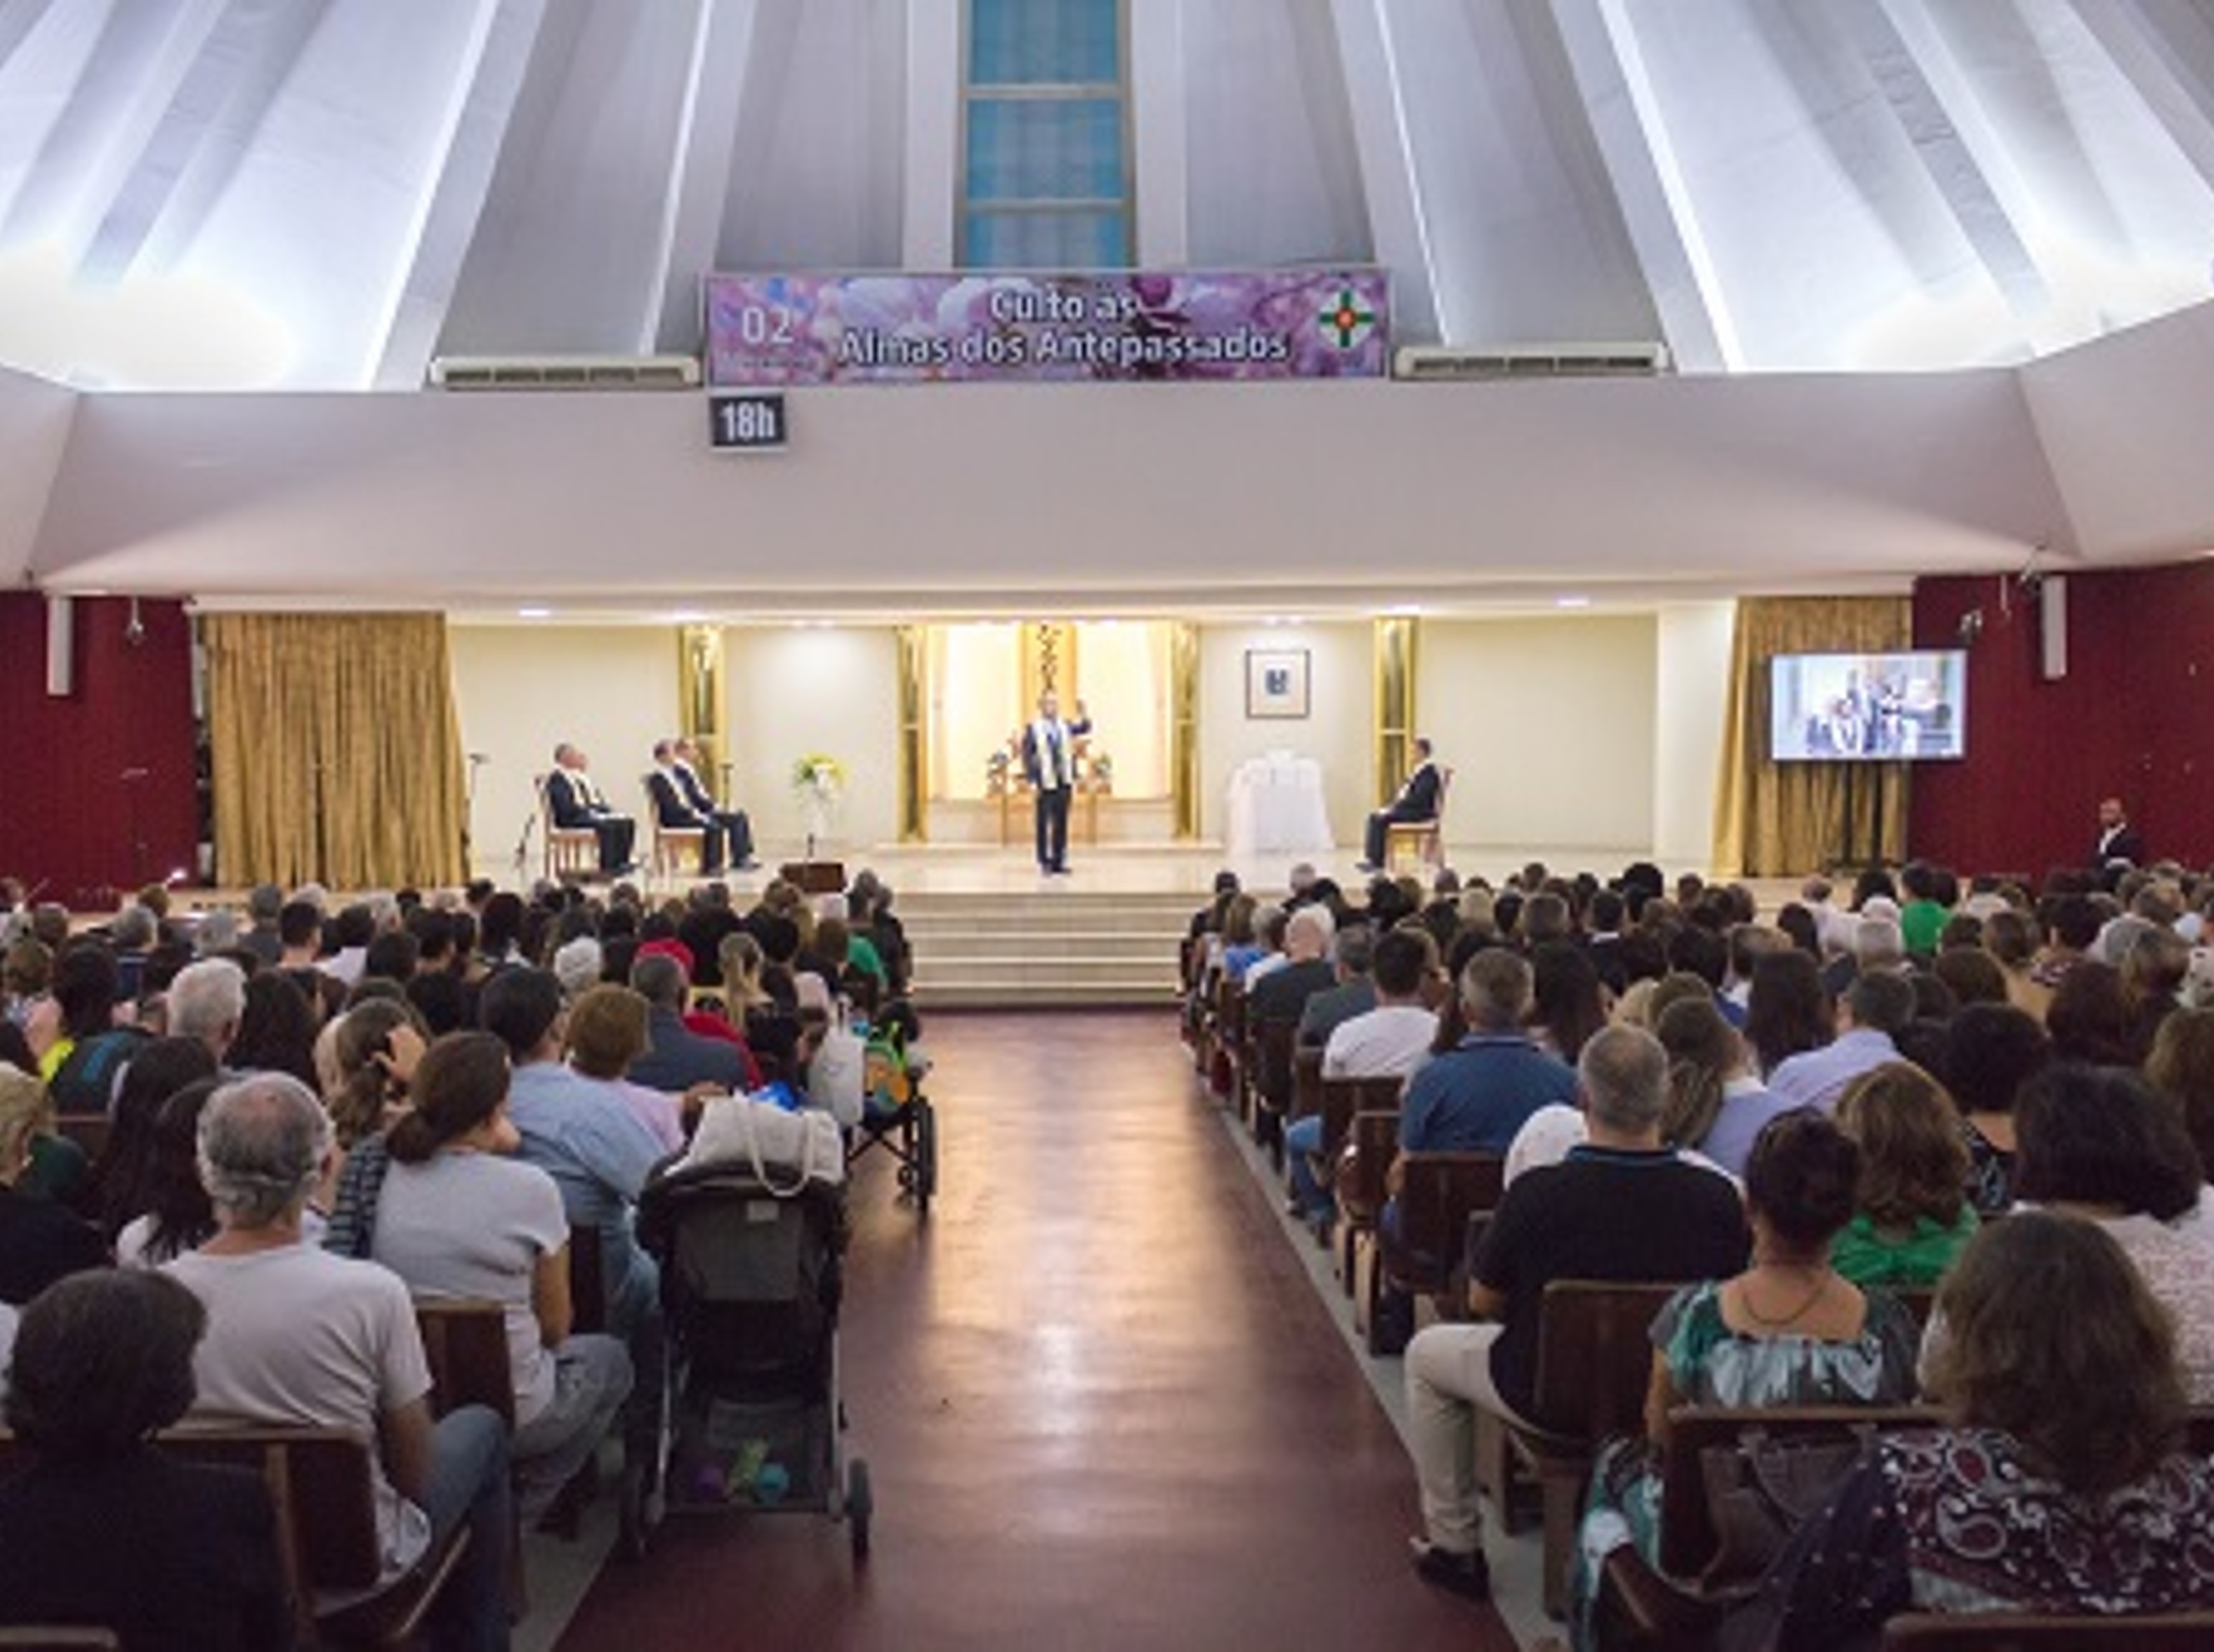 Igreja Brasília realiza Culto às Almas dos Antepassados